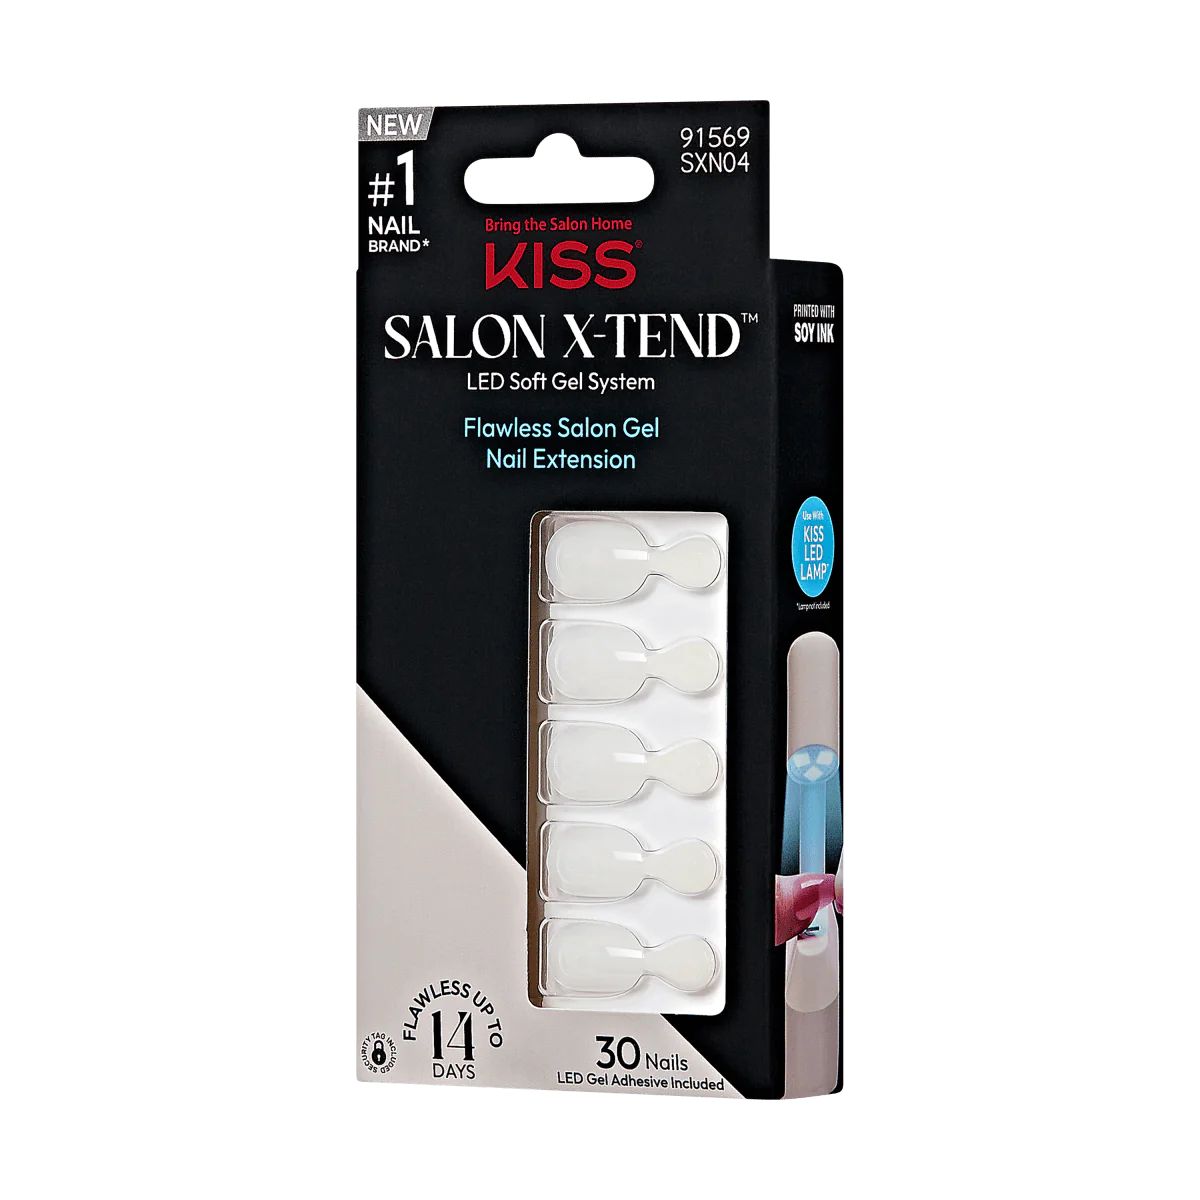 KISS Salon X-tend LED Soft Gel System Color Nails, Solid White, Short Oval, 34 Ct. | KISS, imPRESS, JOAH